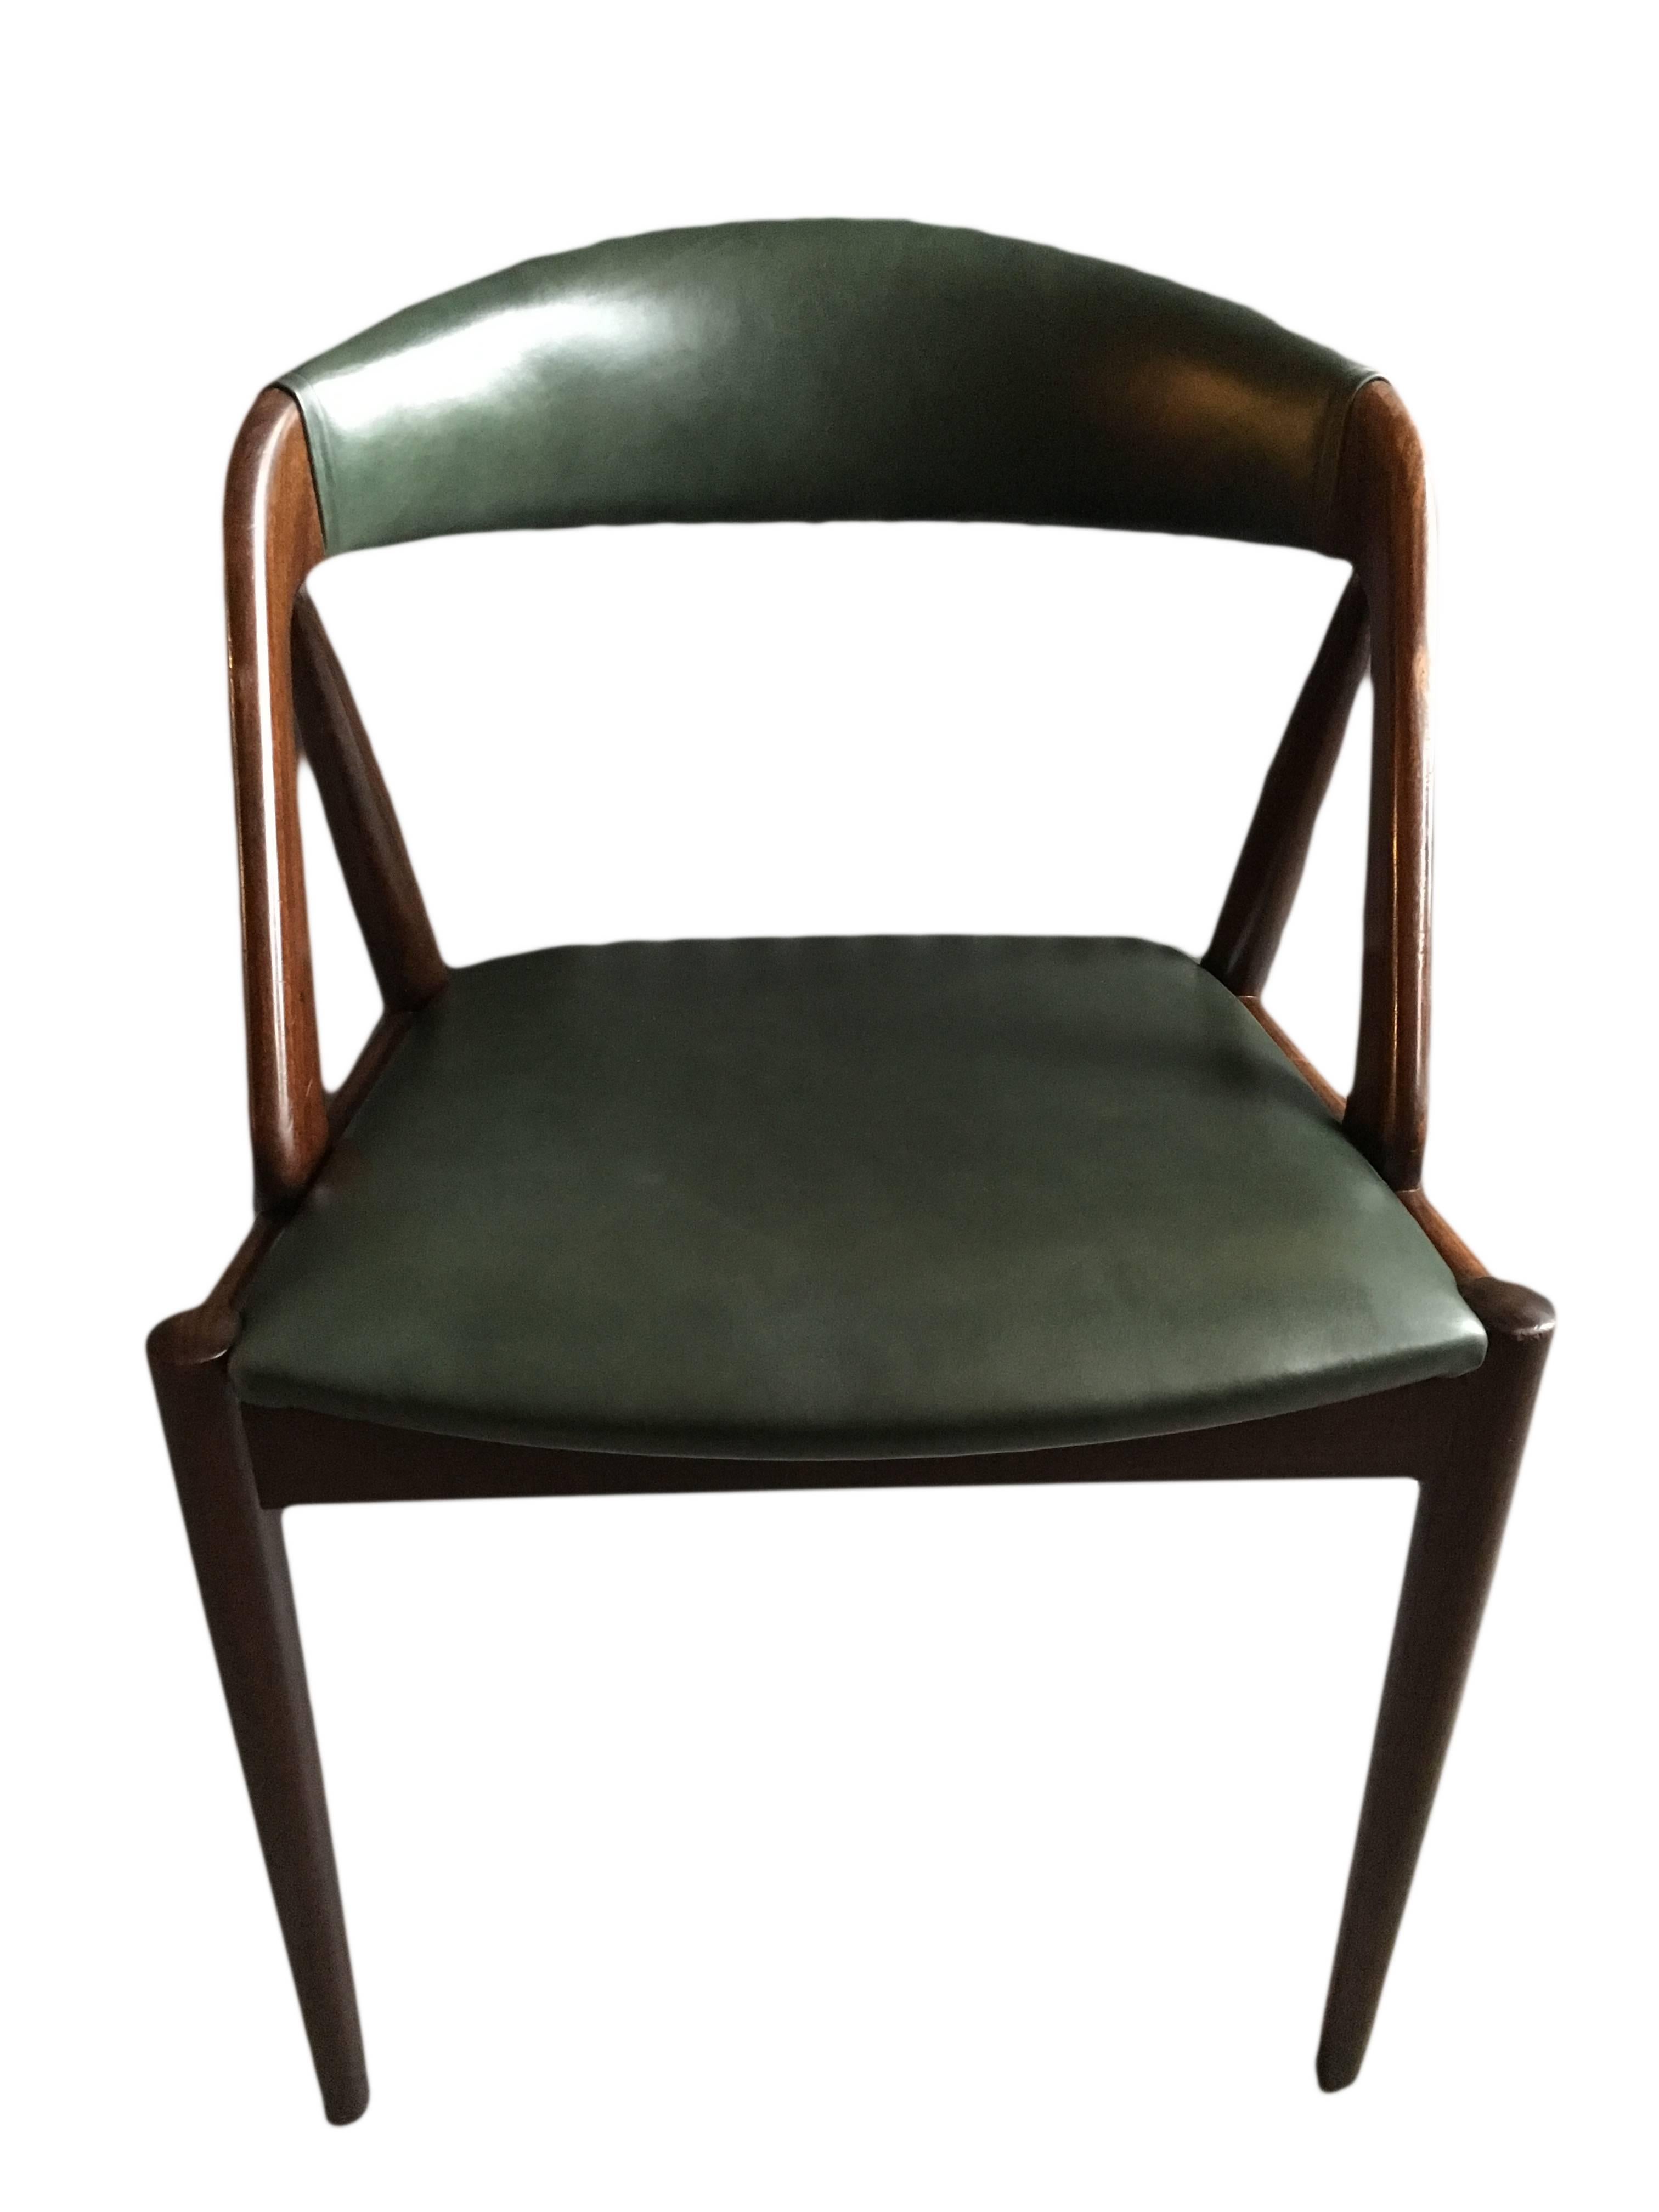 Danish Kai Kristiansen Dining Chairs, Set of Six, New Italian Leather Upholstery